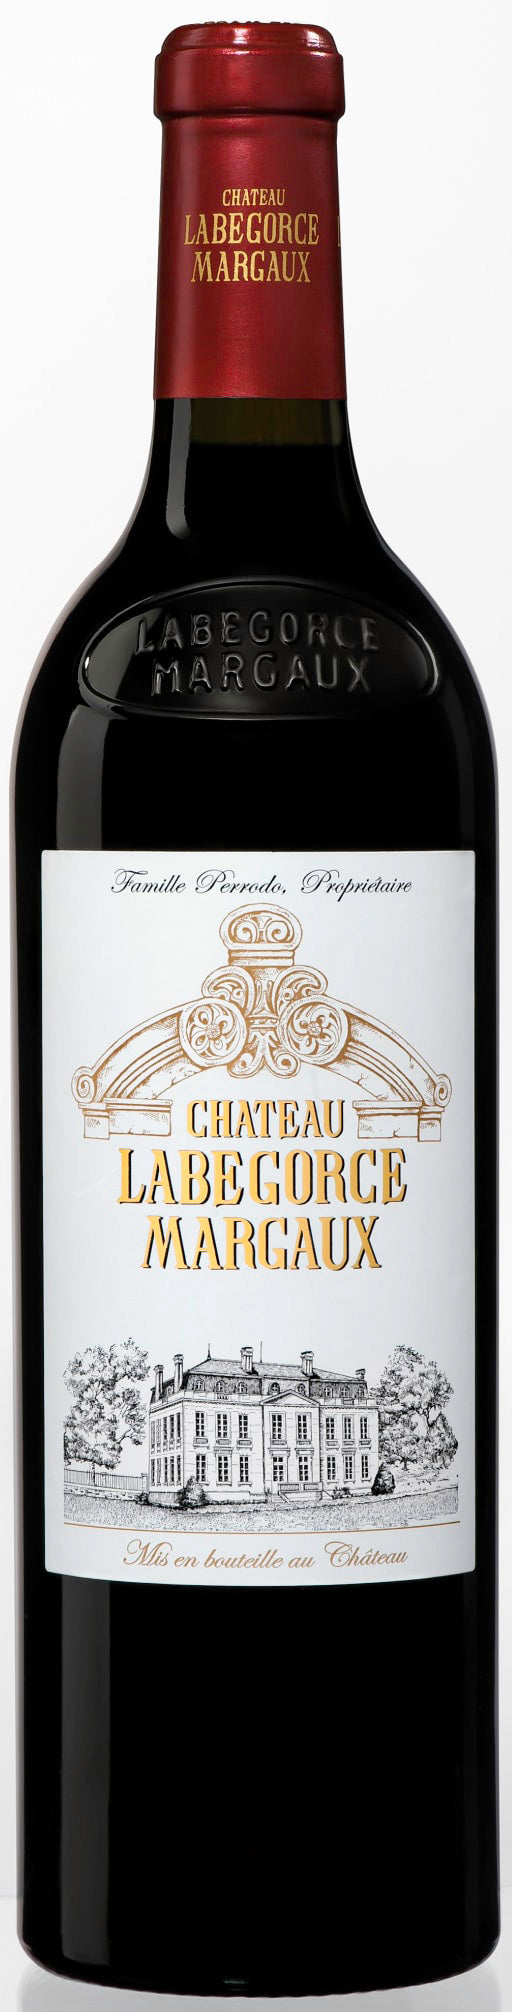 Chateau Labegorce Margaux 2016